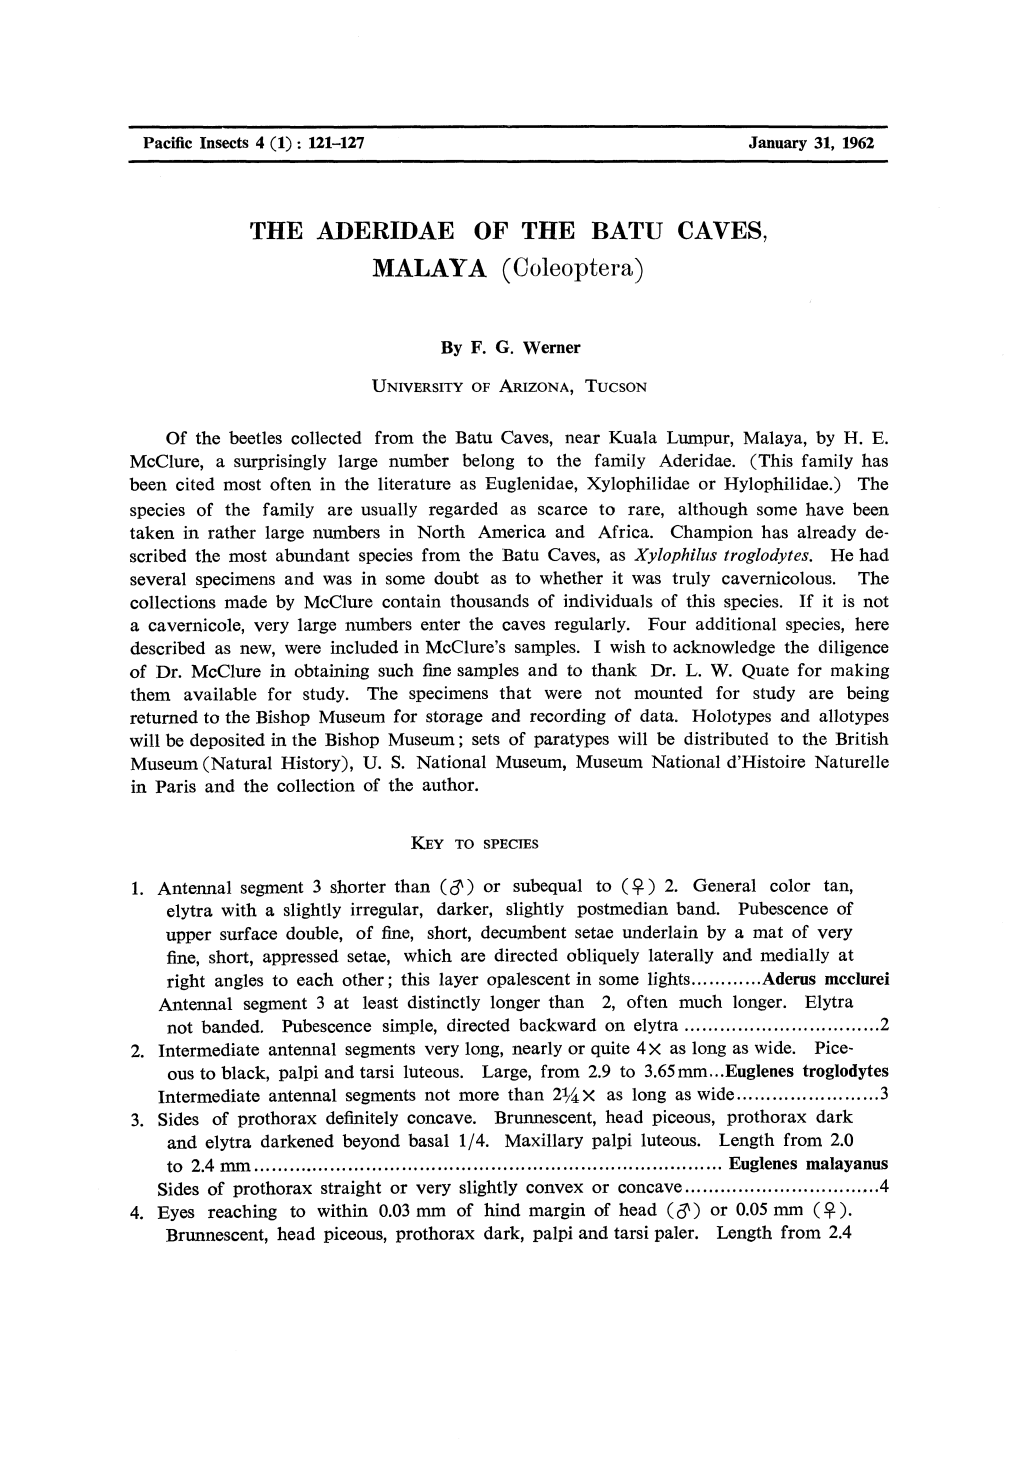 THE ADERIDAE of the BATU CAVES, MALAYA (Coleoptera)